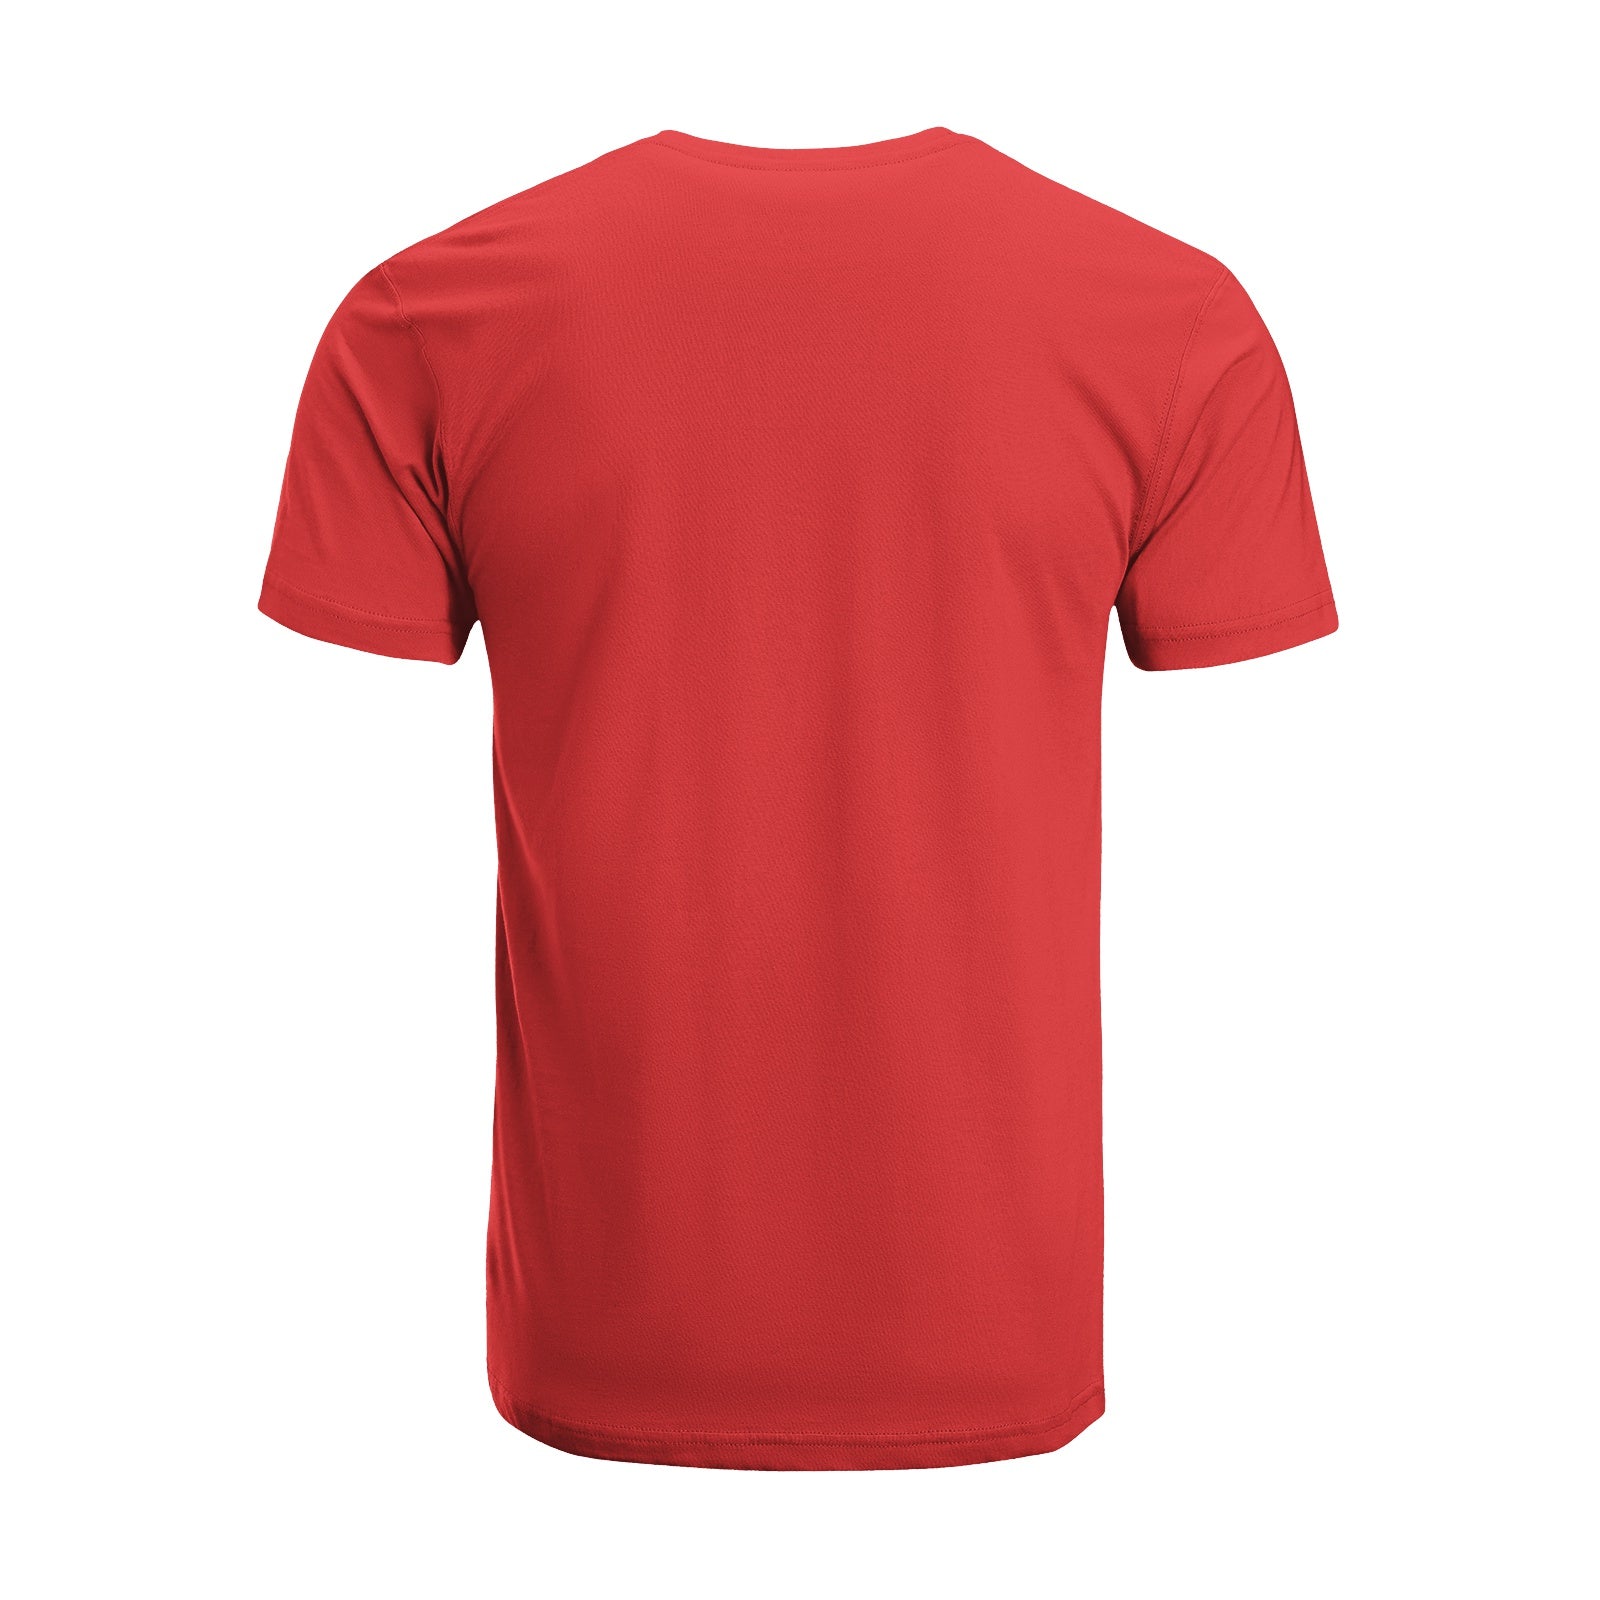 Unisex Short Sleeve Crew Neck Cotton Jersey T-Shirt Gym No. 02 - Tara-Outfits.com